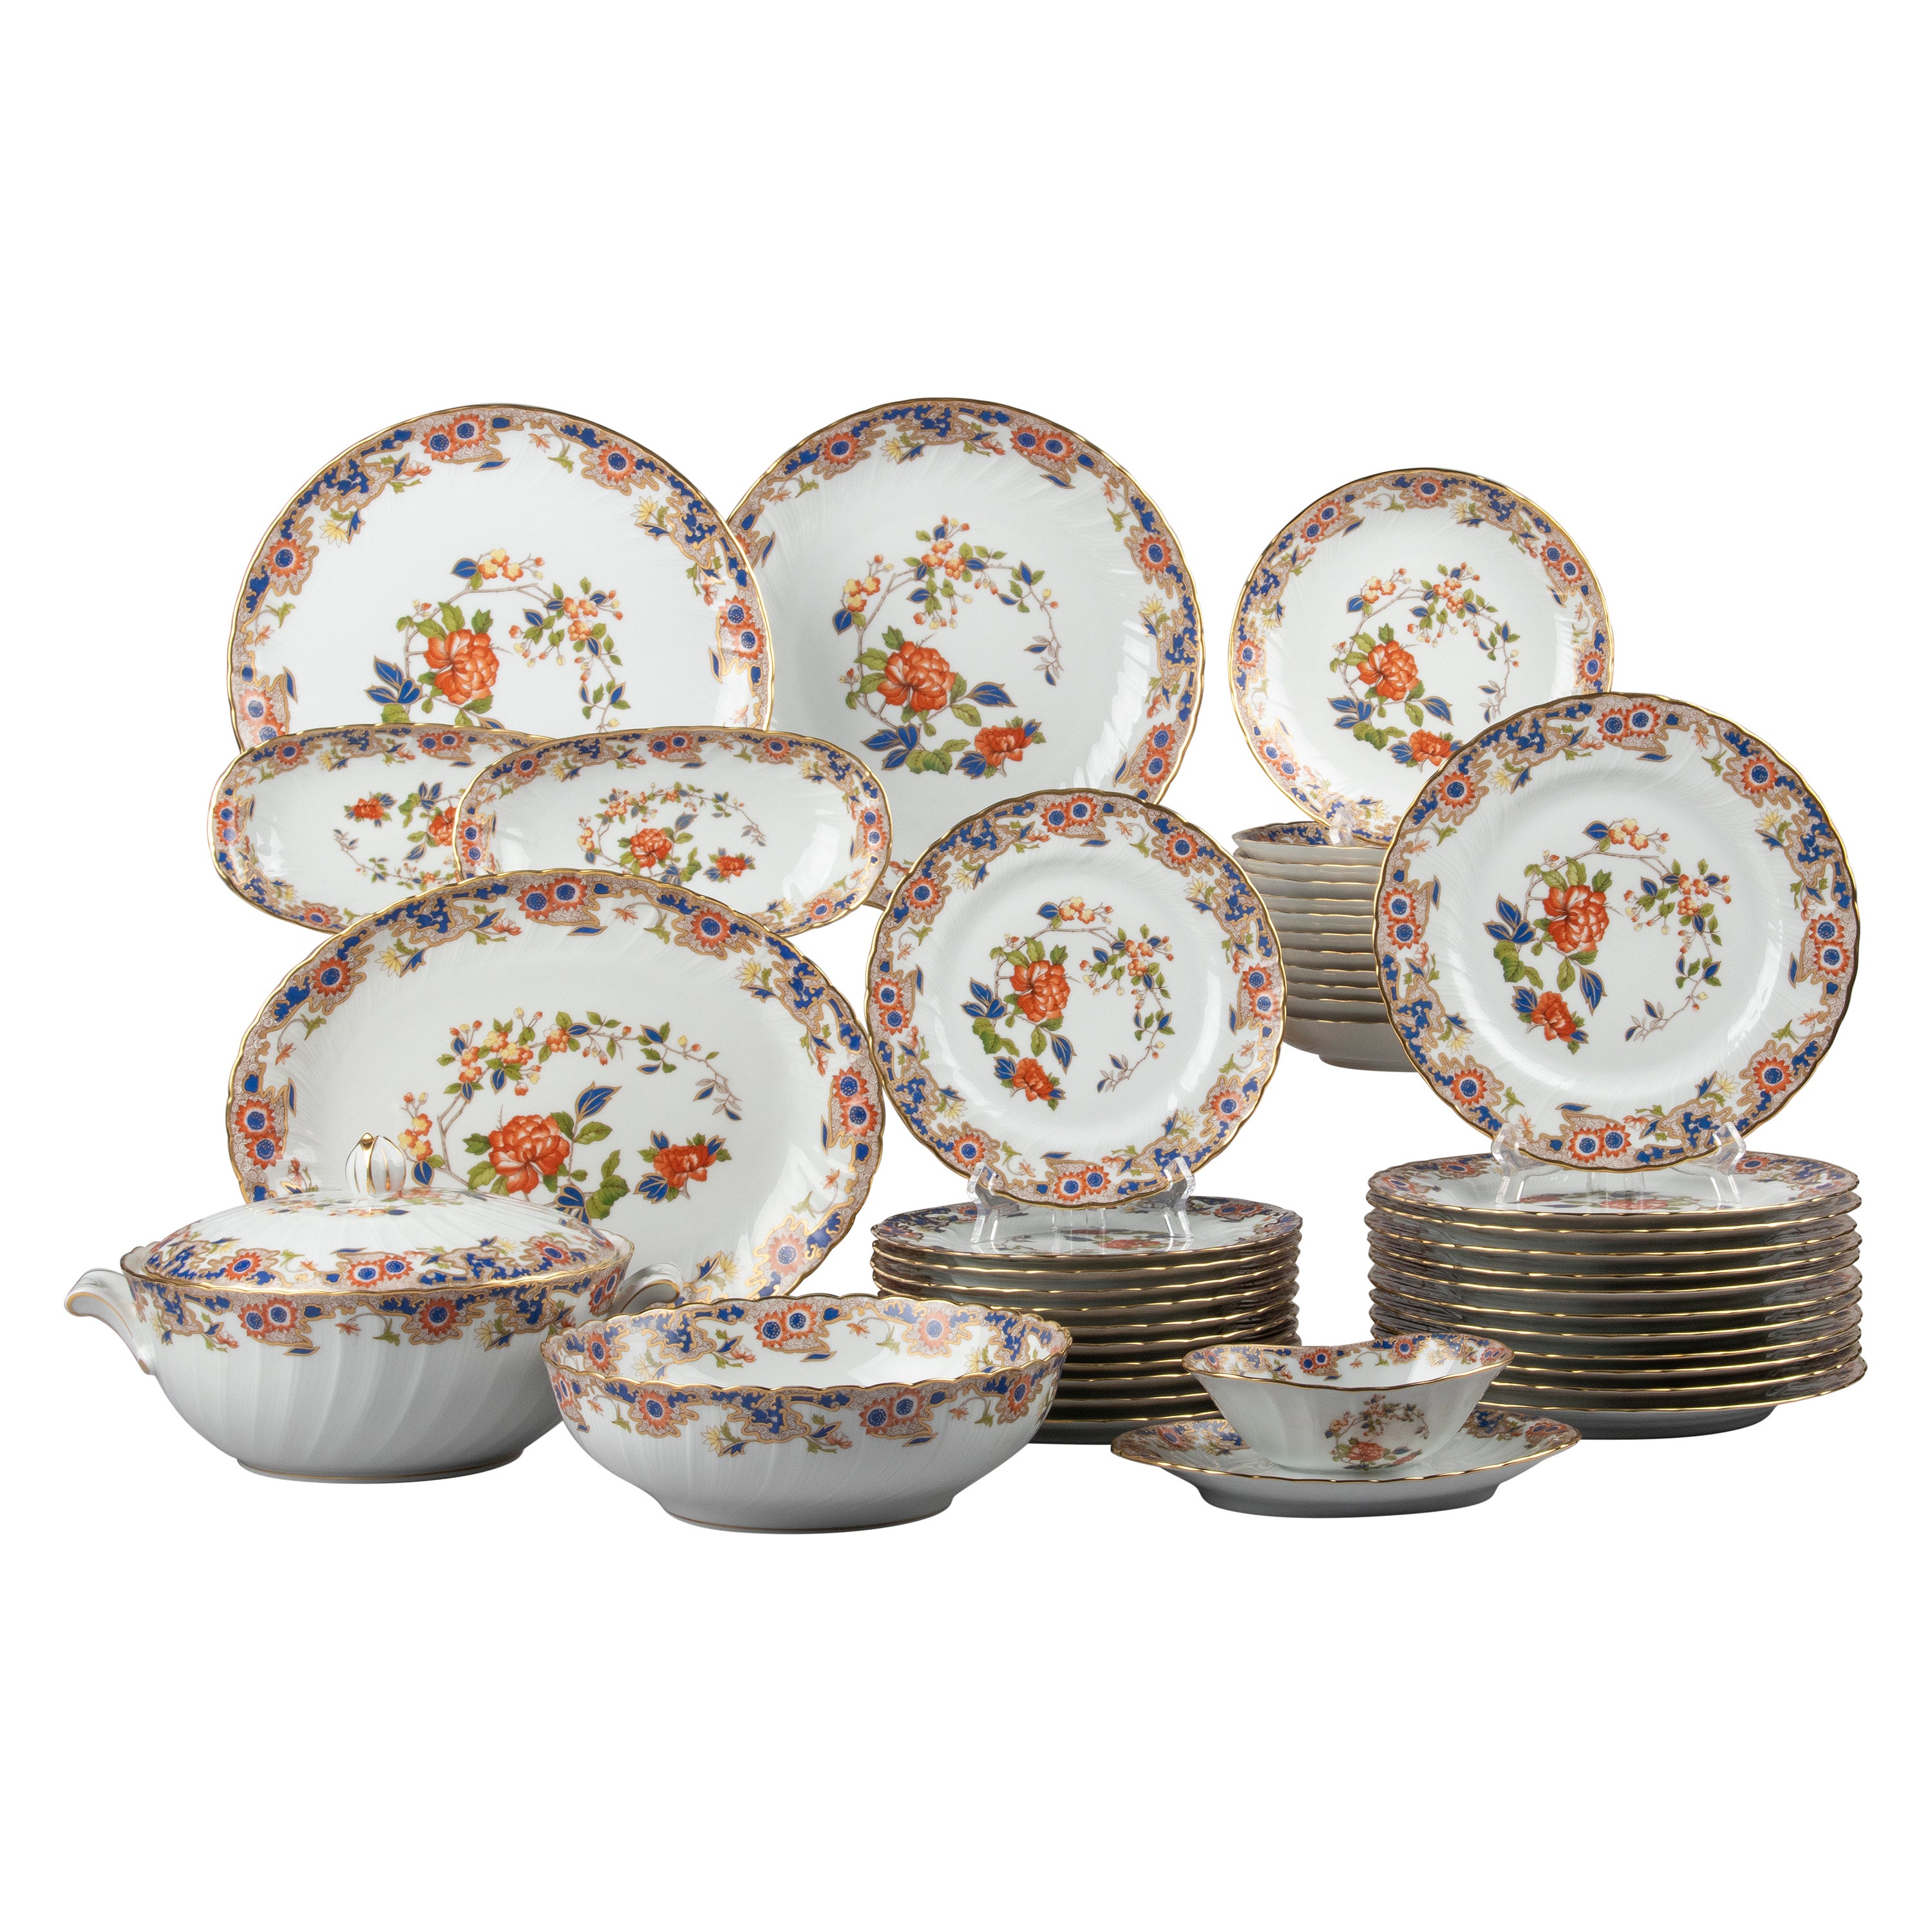 43-Piece Set of Porcelain Tableware made by Bernardaud Limoges model Singapour